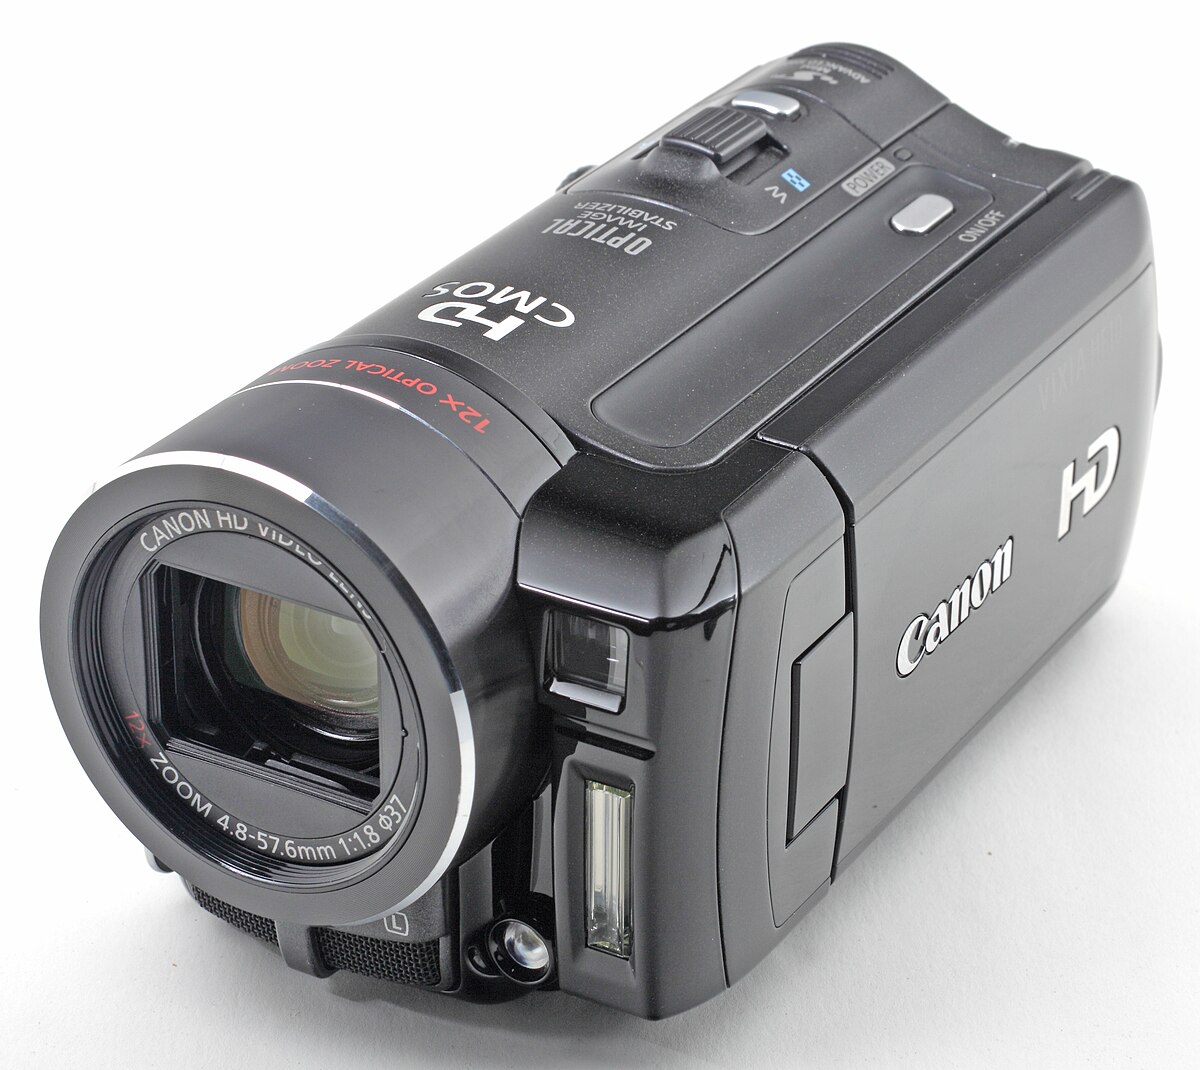 Камера canon для фото и видео